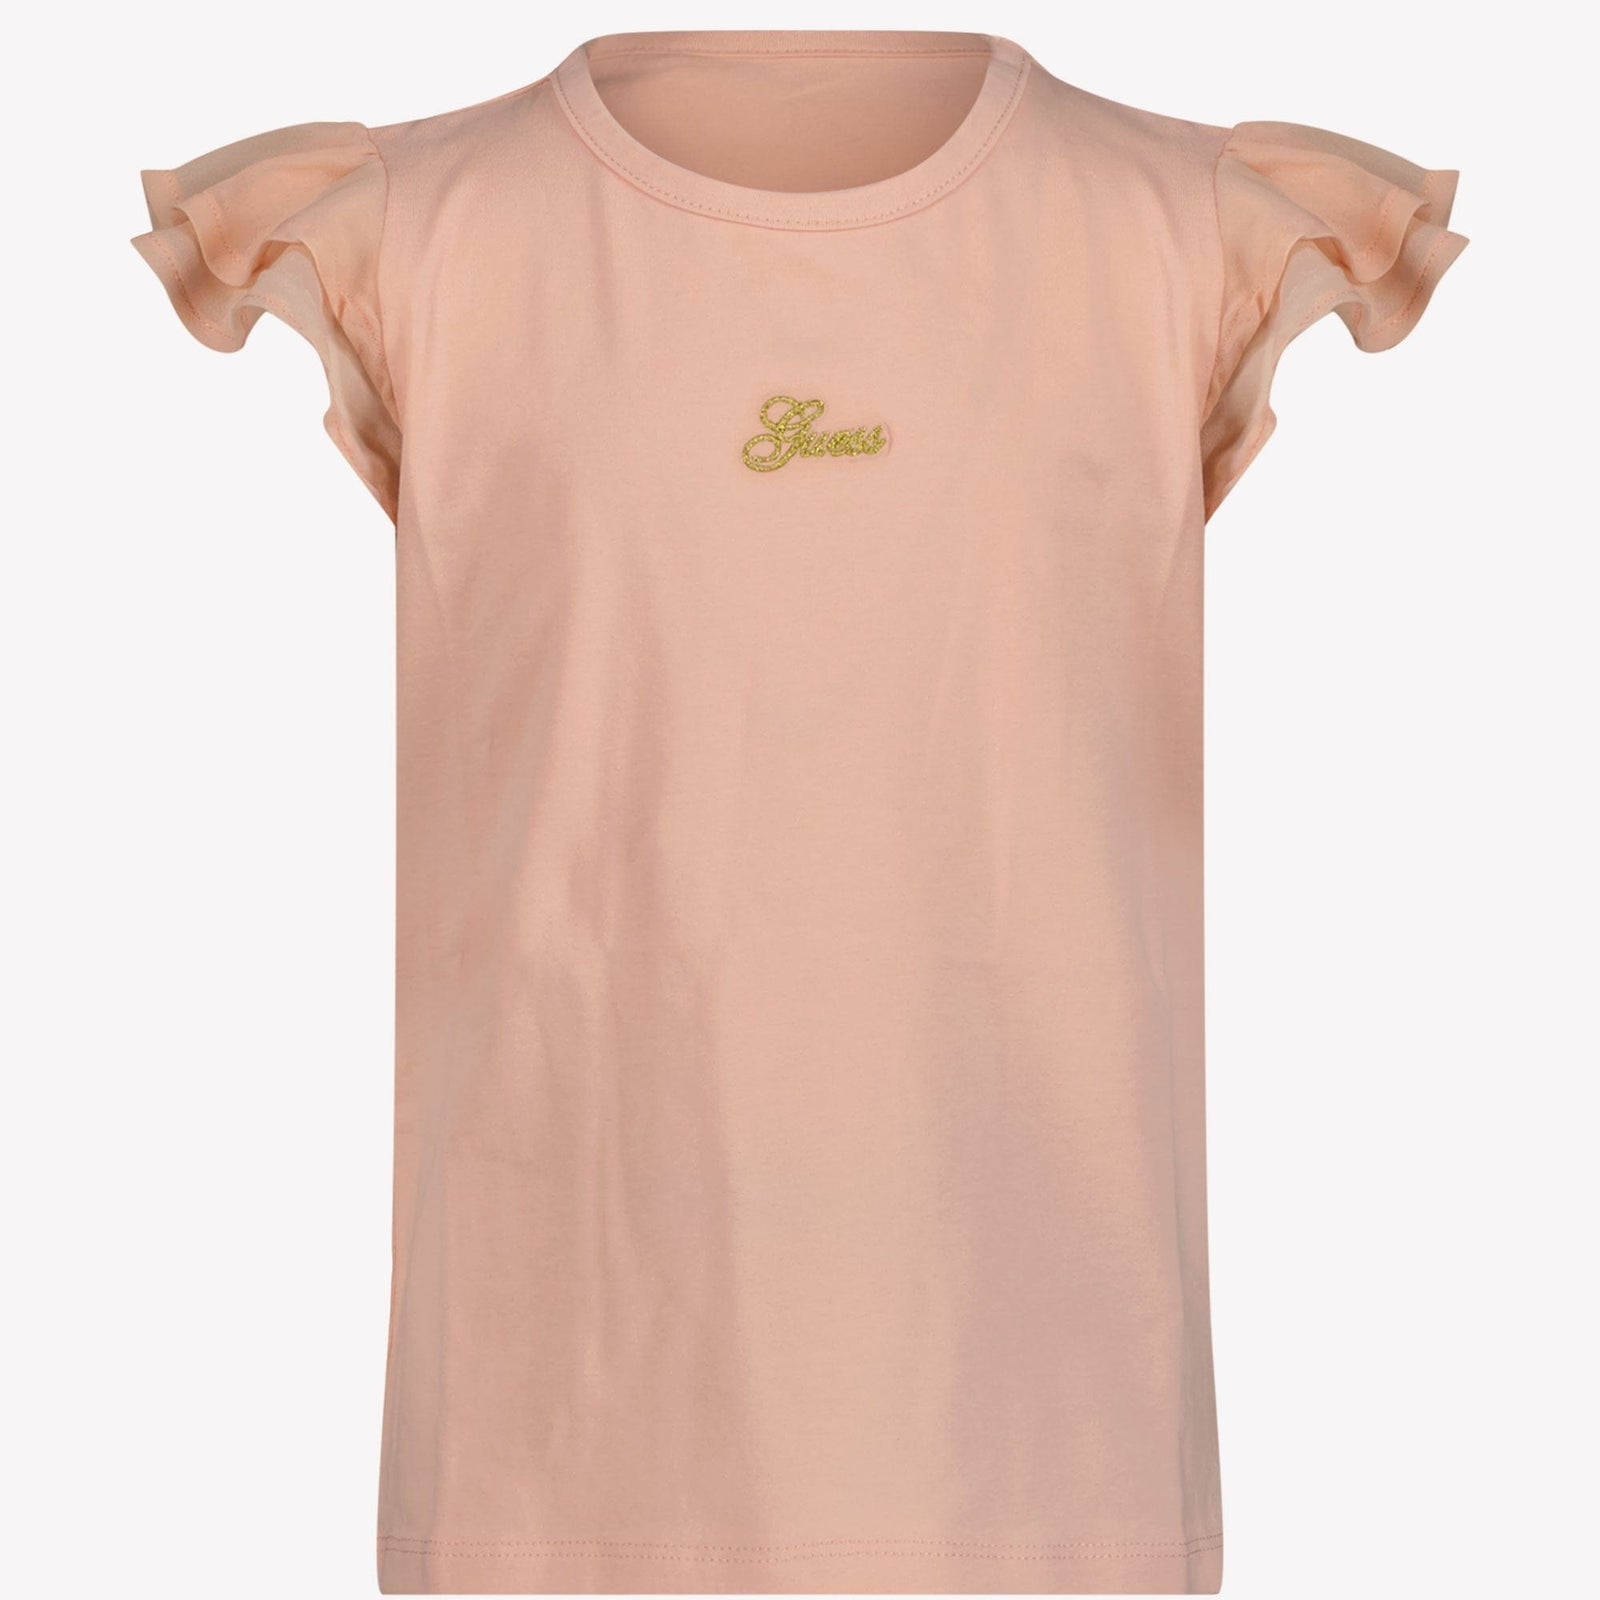 Guess Kinder Meisjes T-Shirt Zalm 2Y